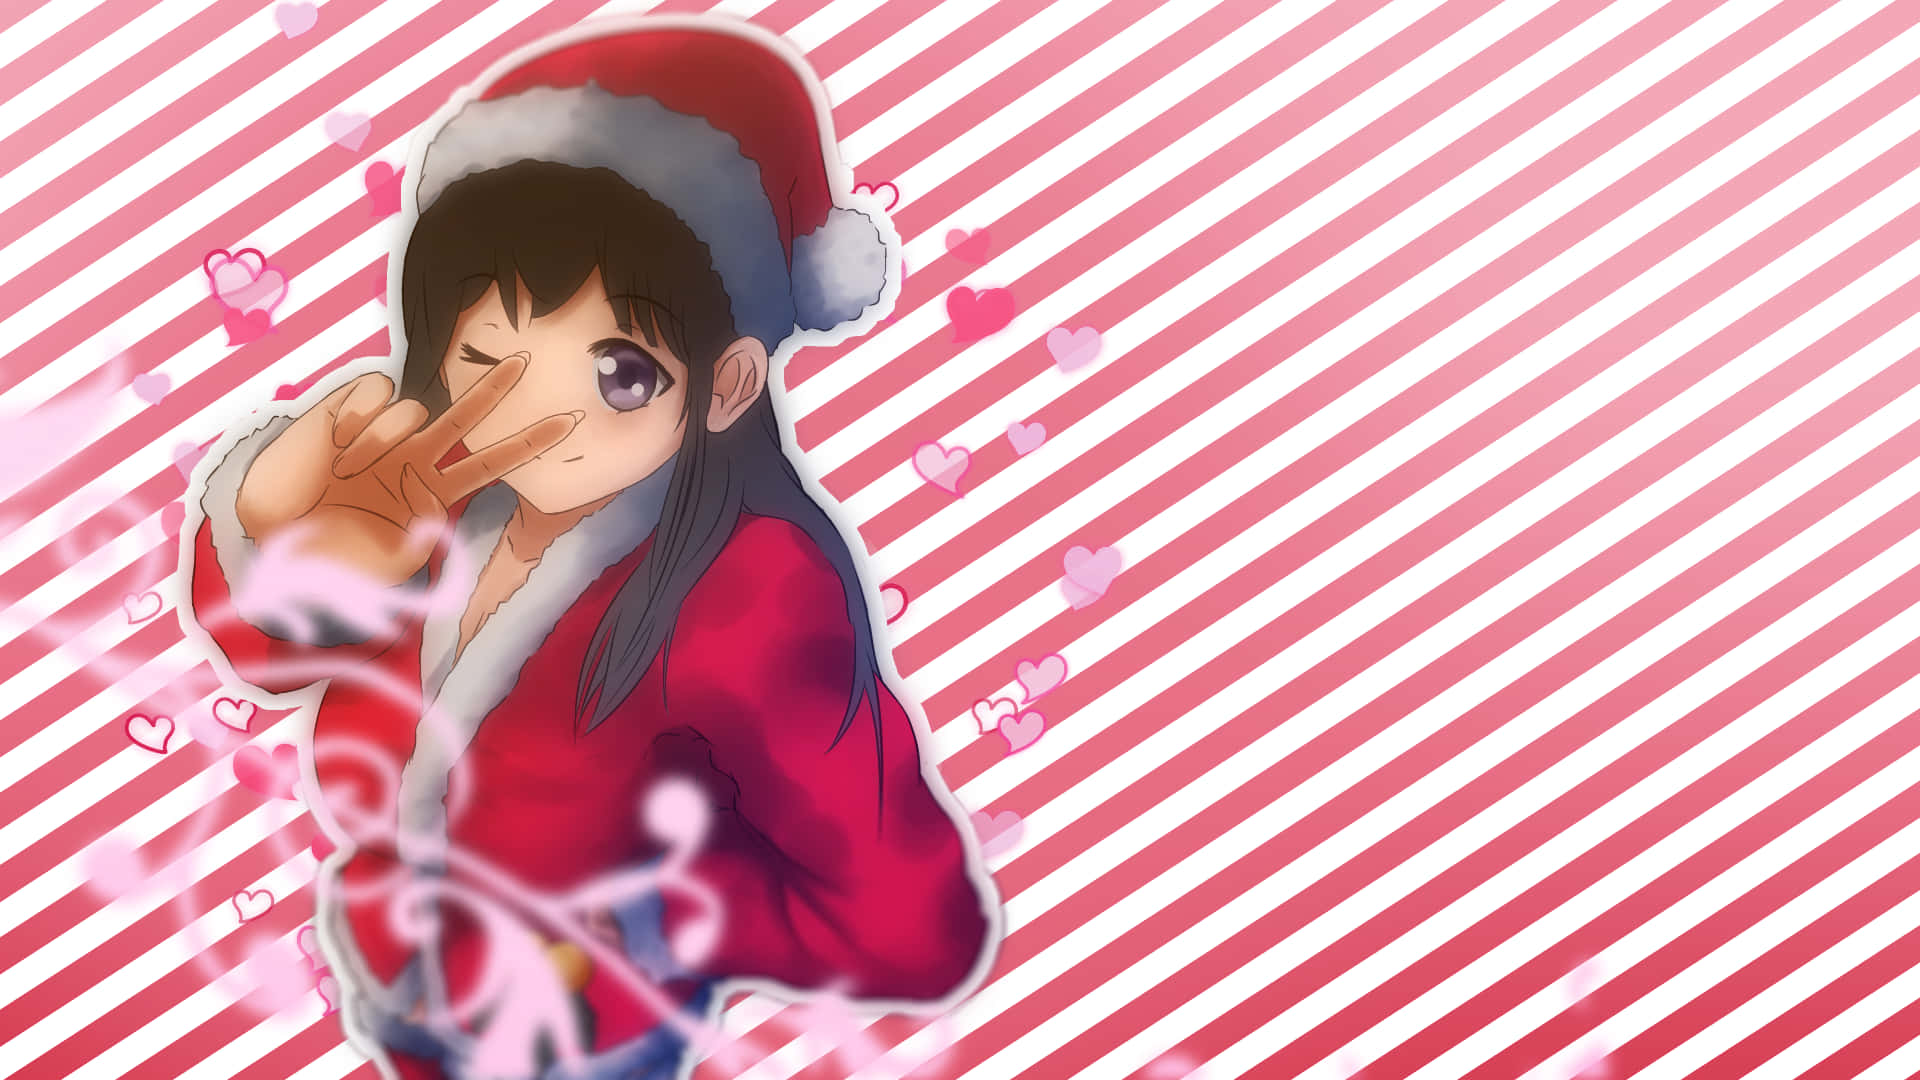 Celebrate the holiday season with an Anime Christmas